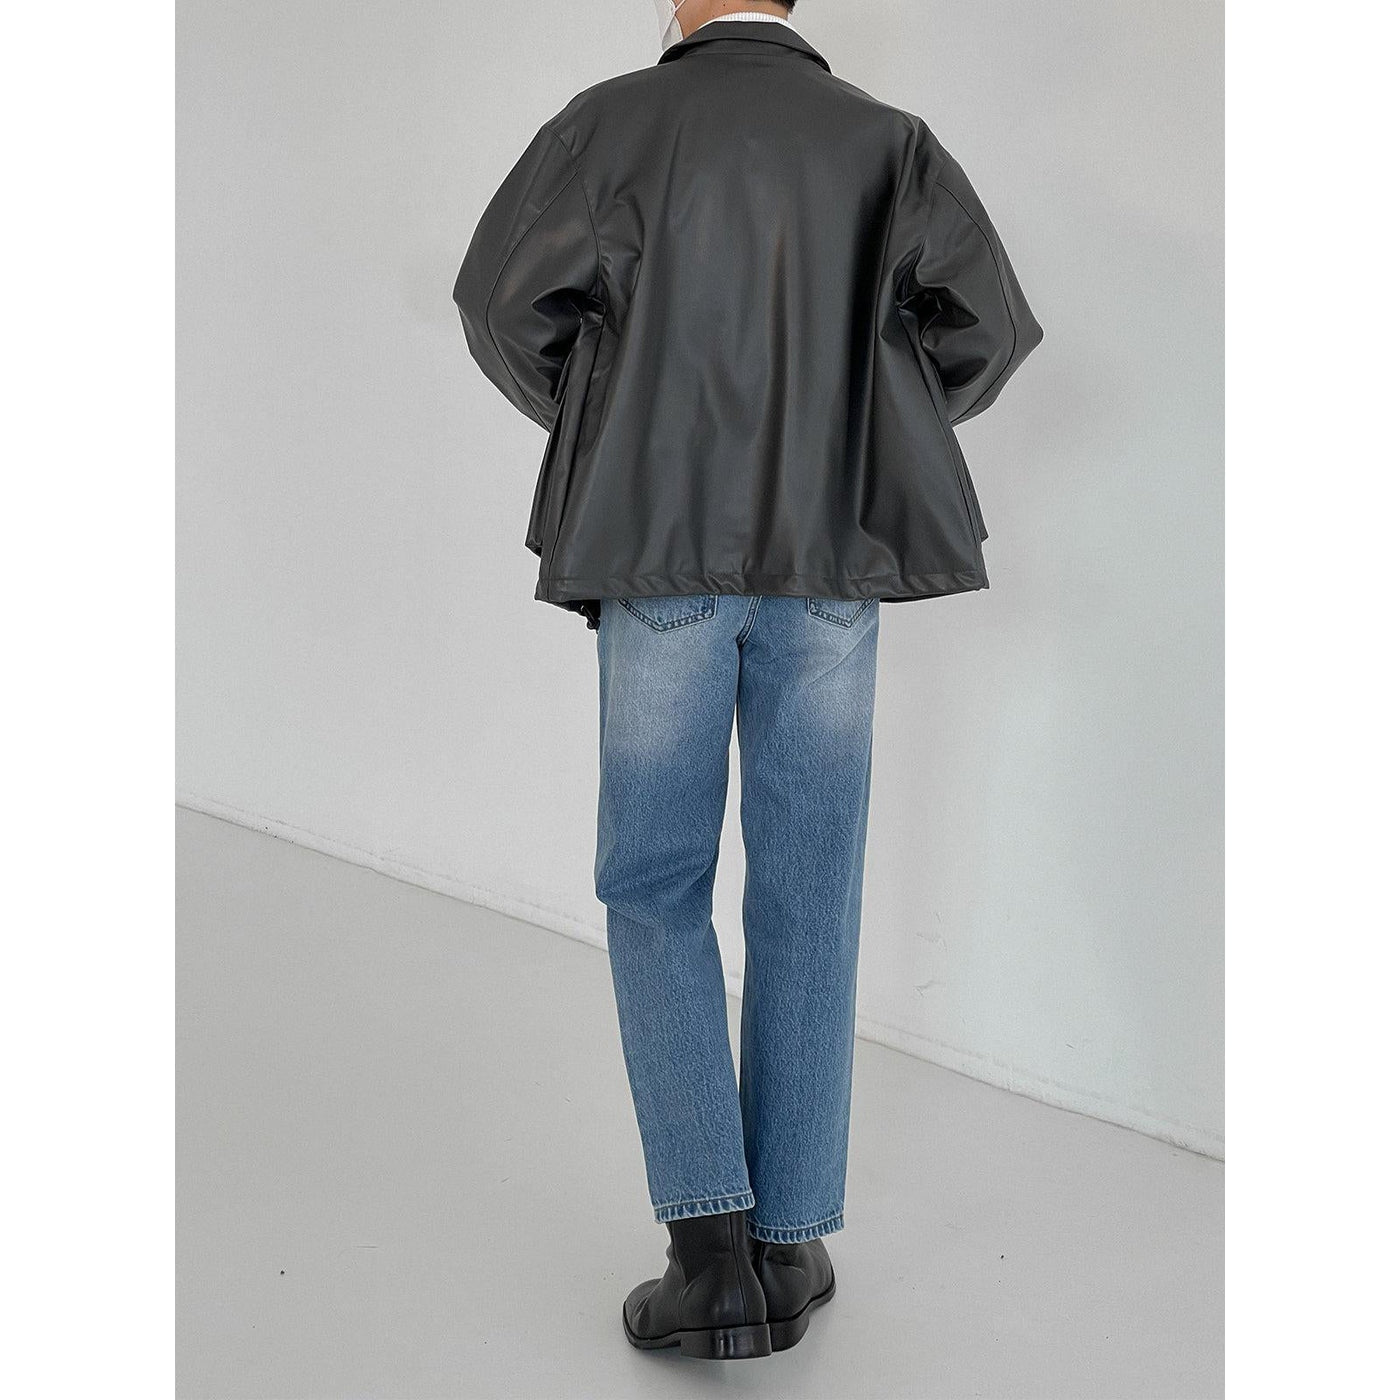 Zhou Essential Smooth Zip-up Jacket-korean-fashion-Jacket-Zhou's Closet-OH Garments